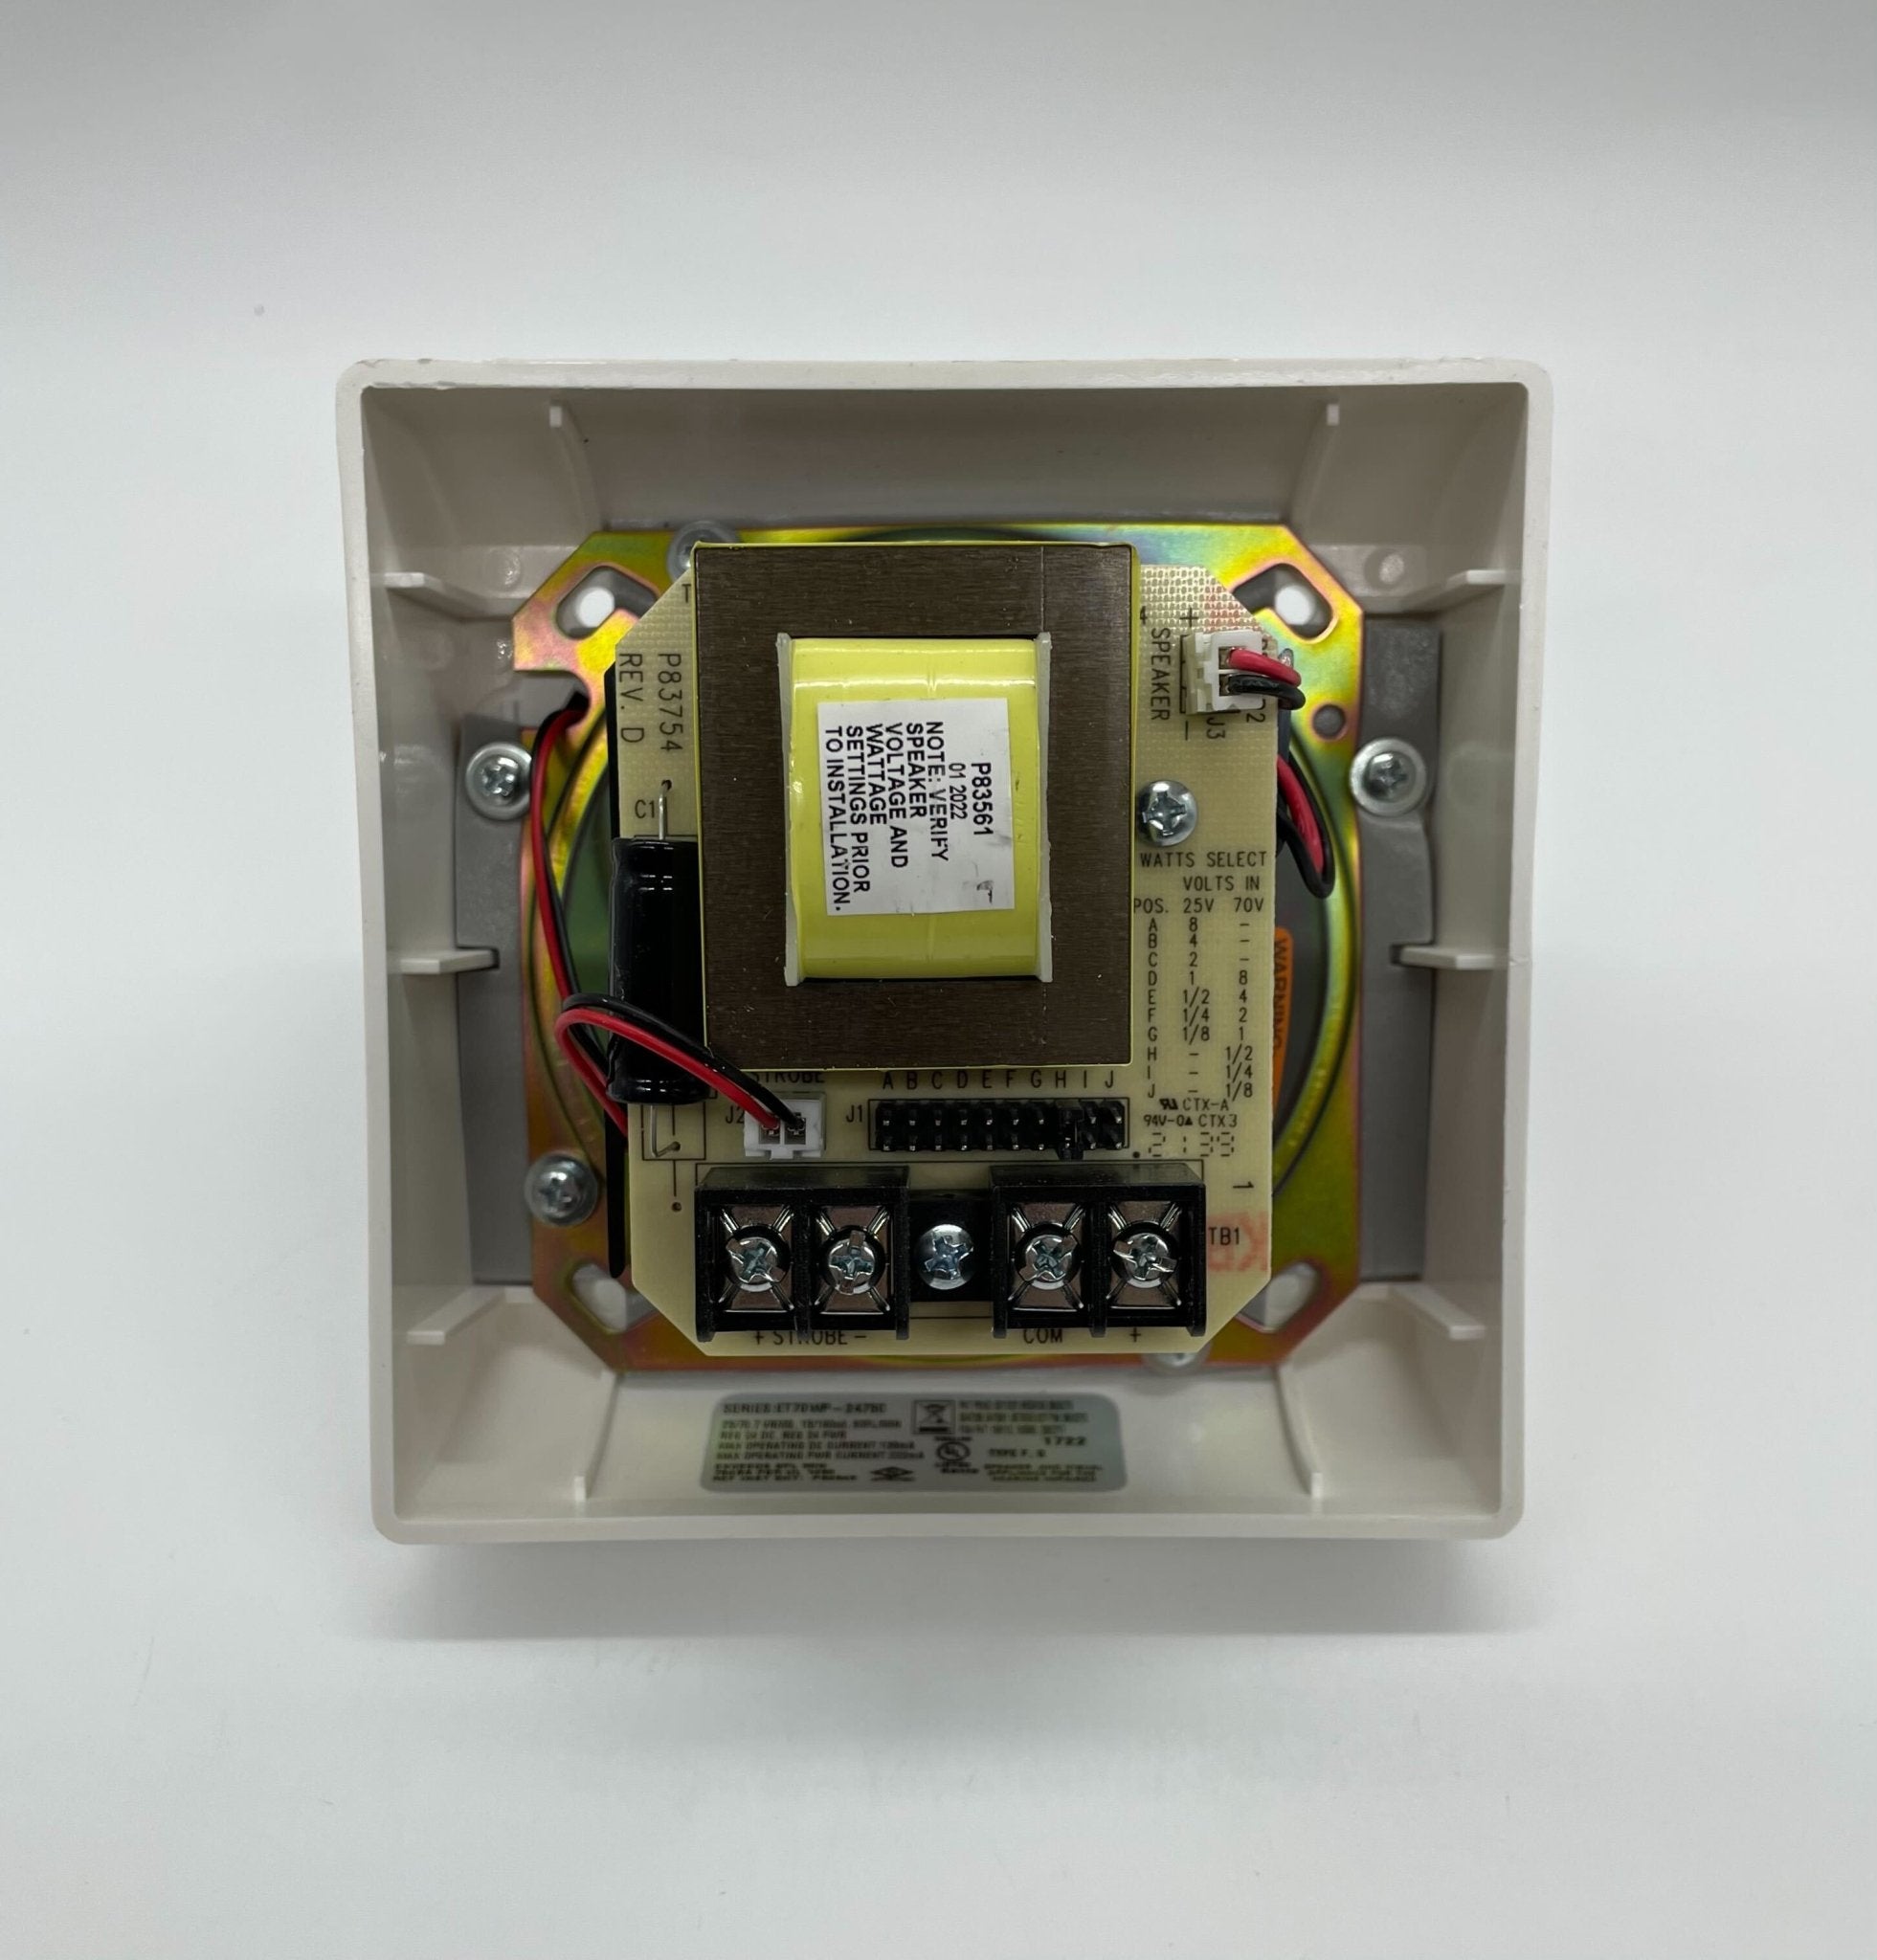 Wheelock ET70WP-2475C-FW - The Fire Alarm Supplier